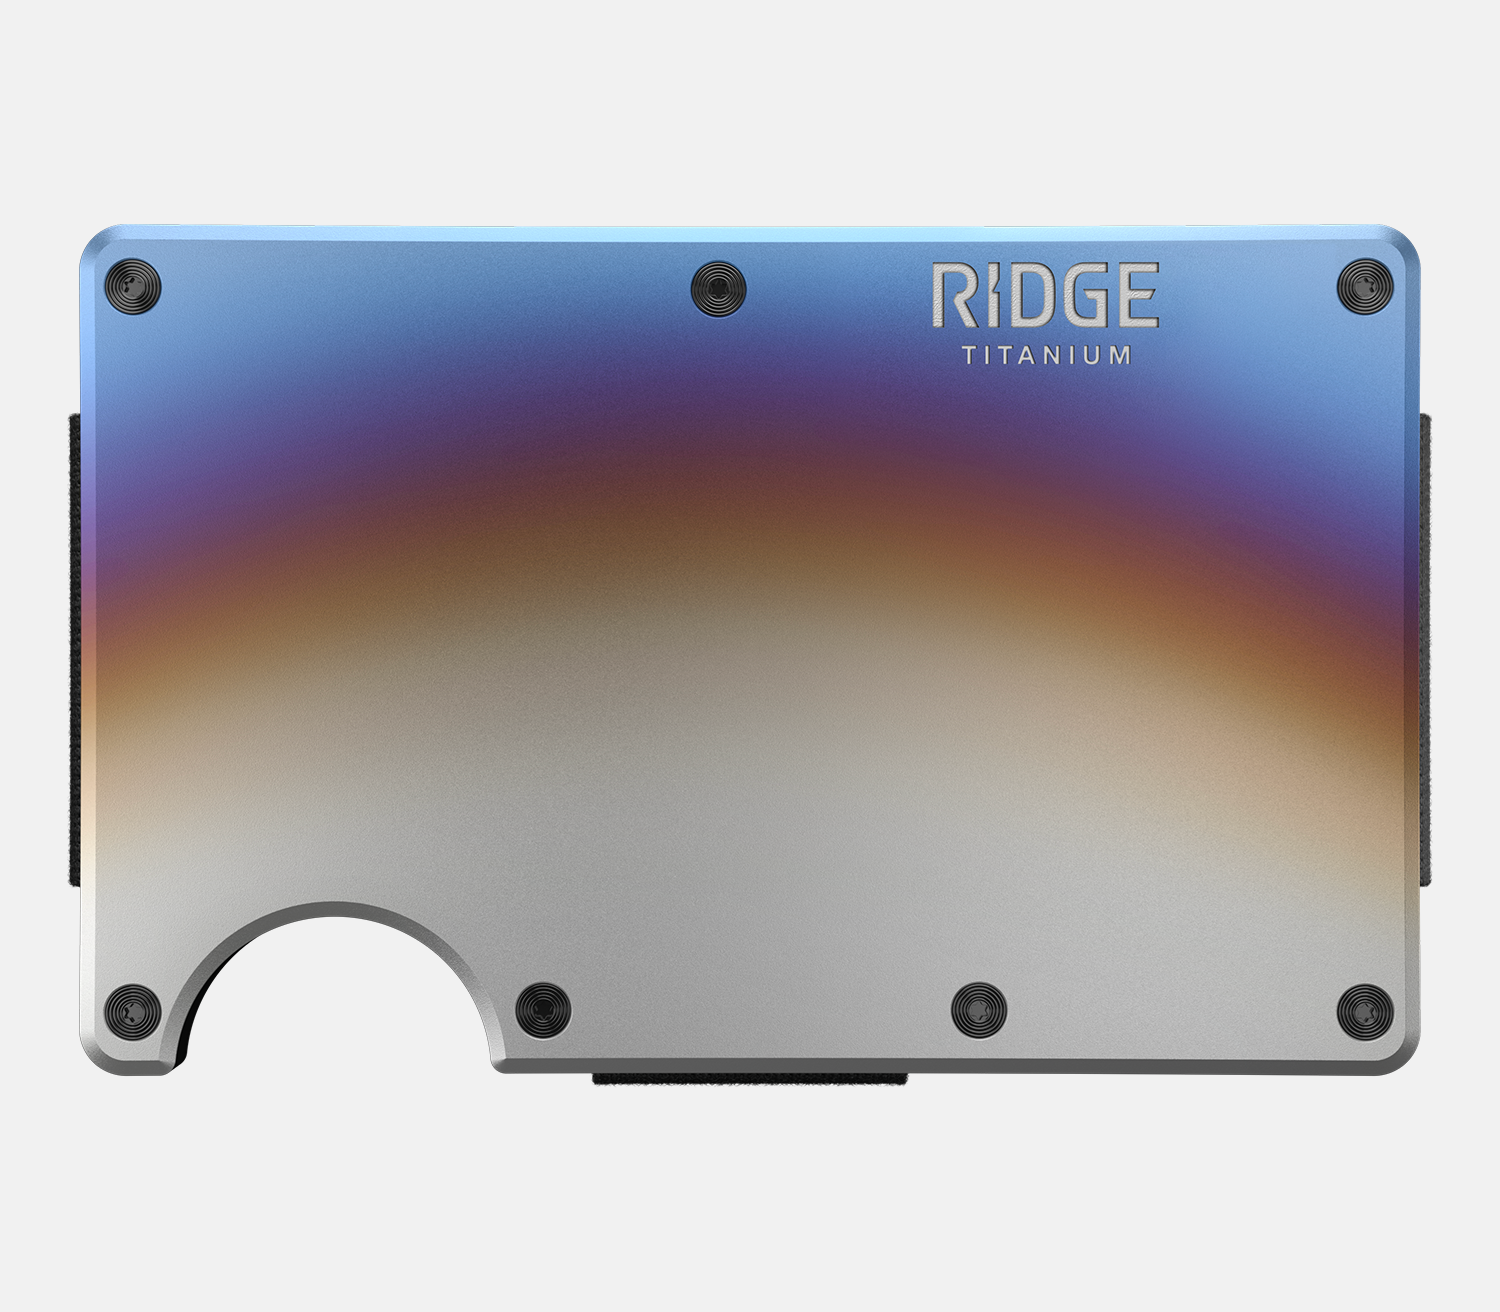 The Ridge Wallet Review (Titanium)